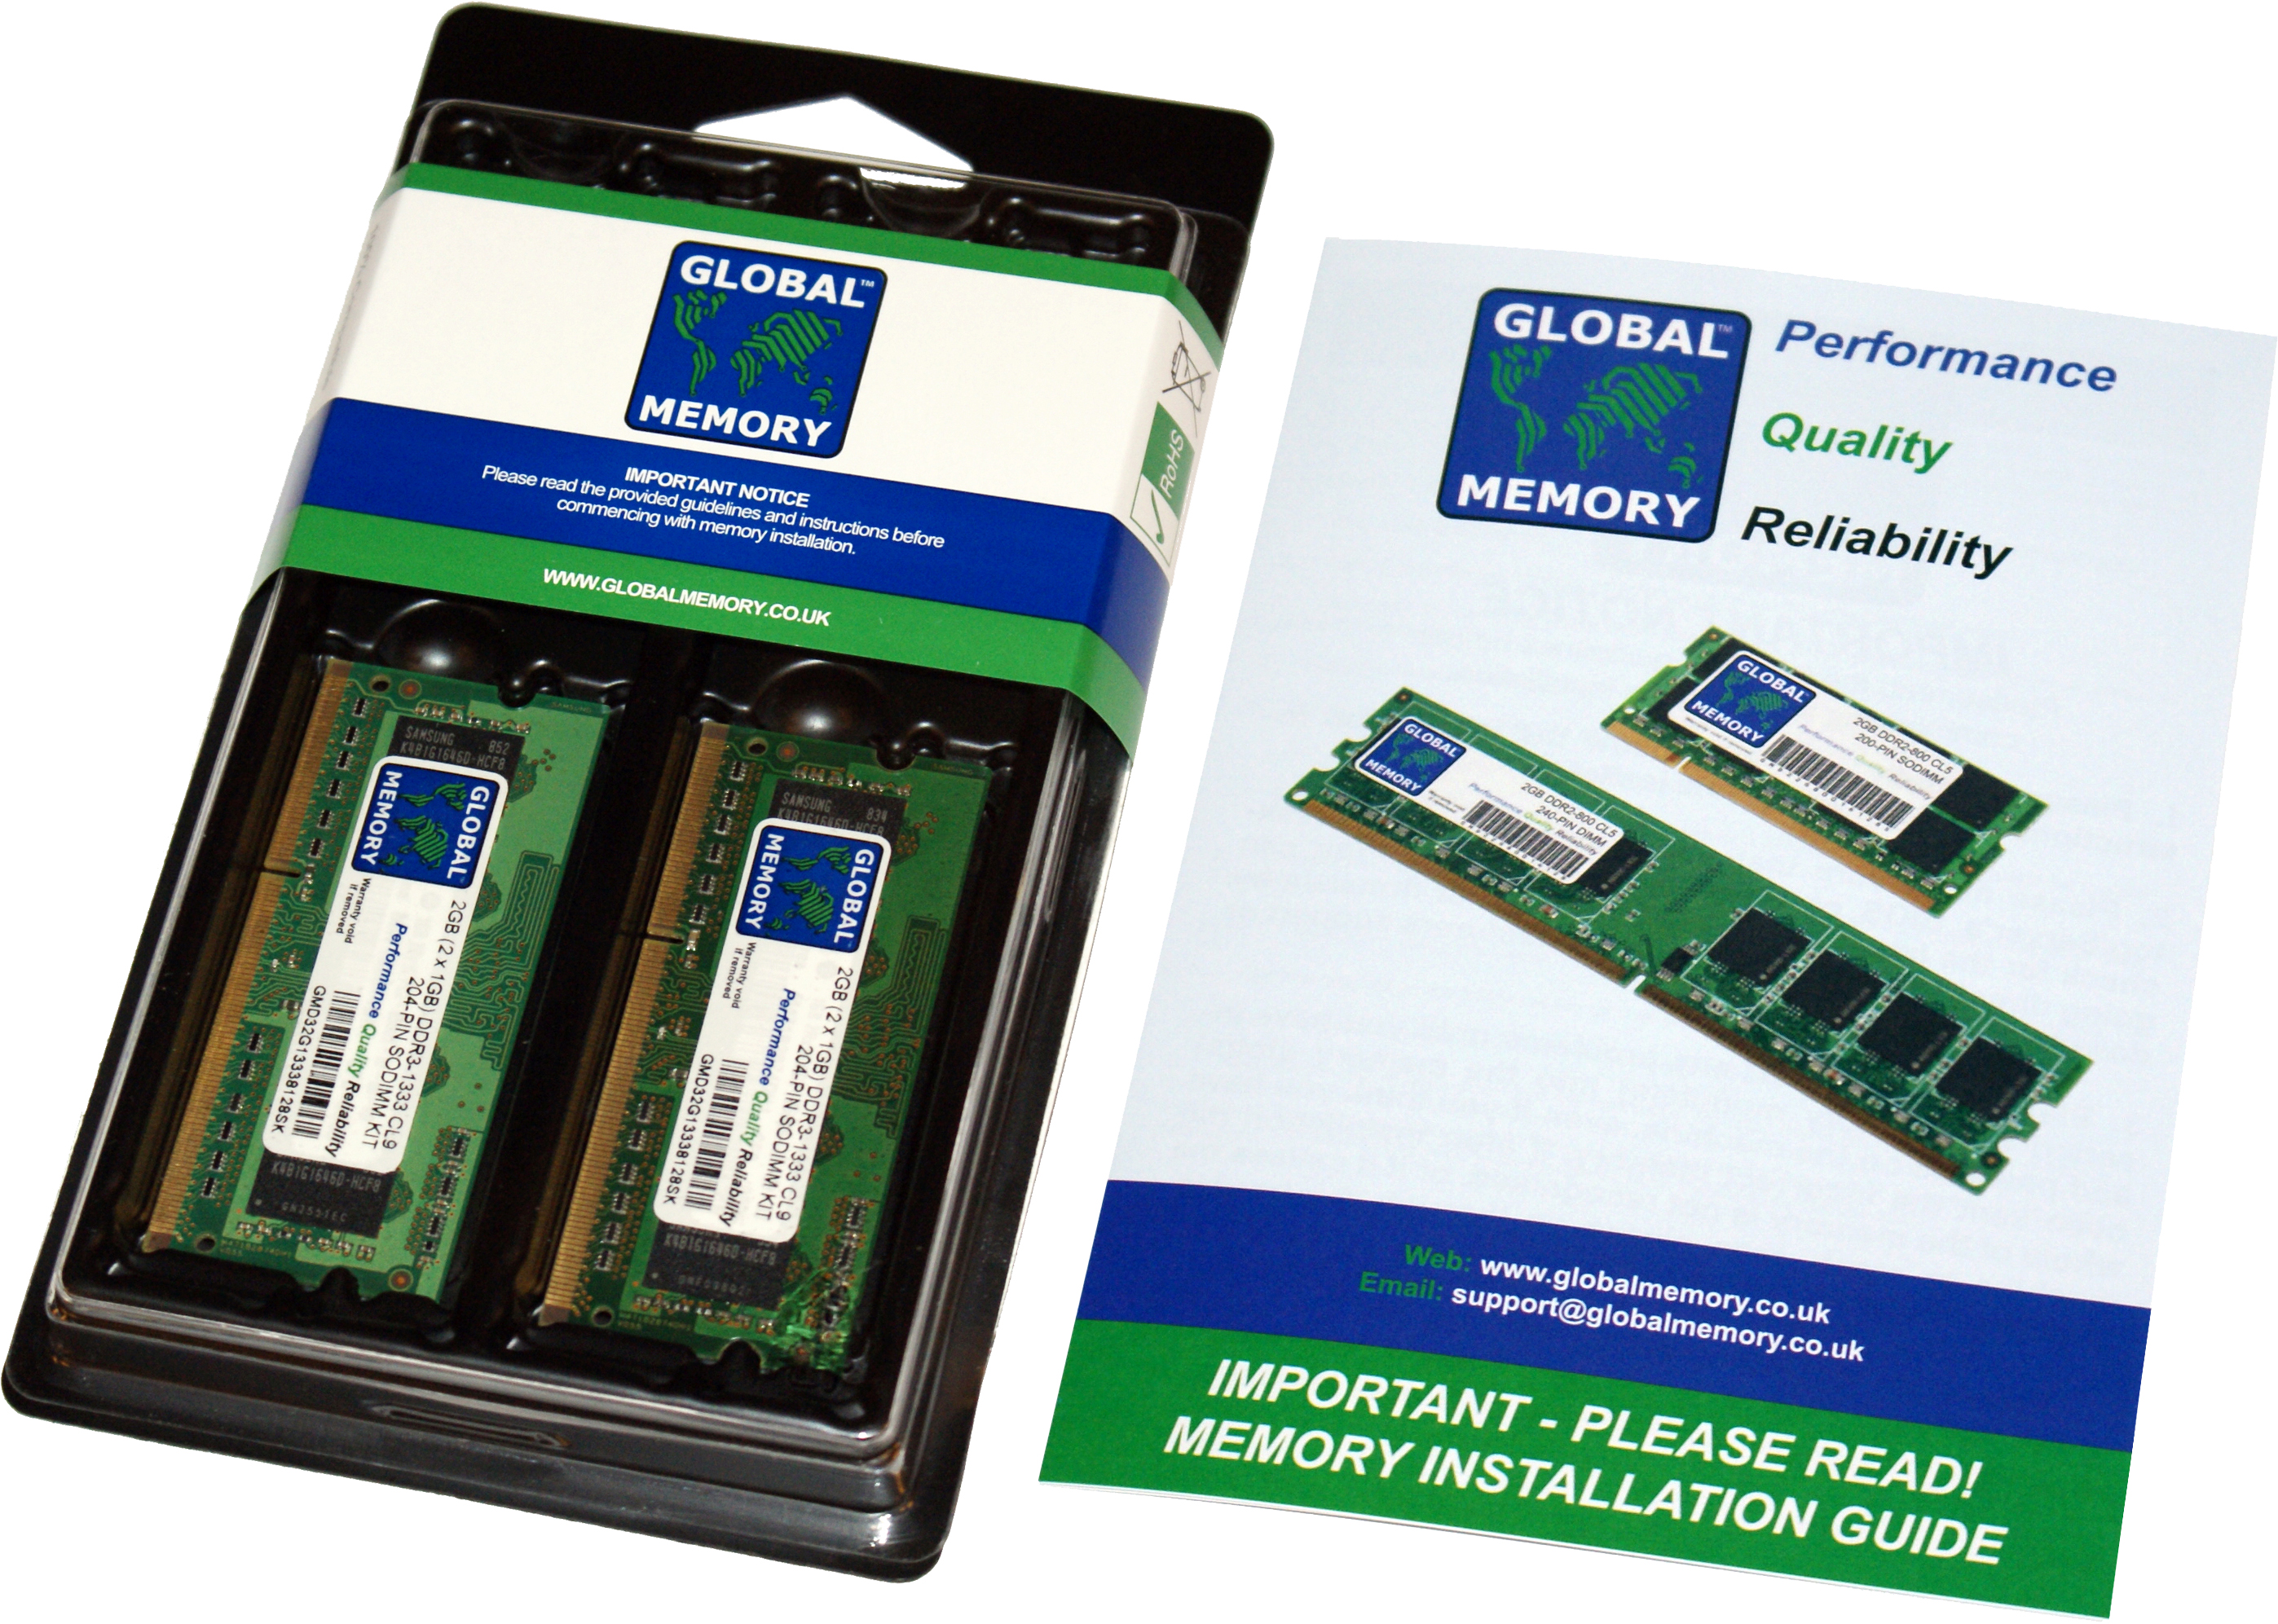 16GB (2 x 8GB) DDR4 2933MHz PC4-23400 260-PIN SODIMM MEMORY RAM KIT FOR SAMSUNG LAPTOPS/NOTEBOOKS